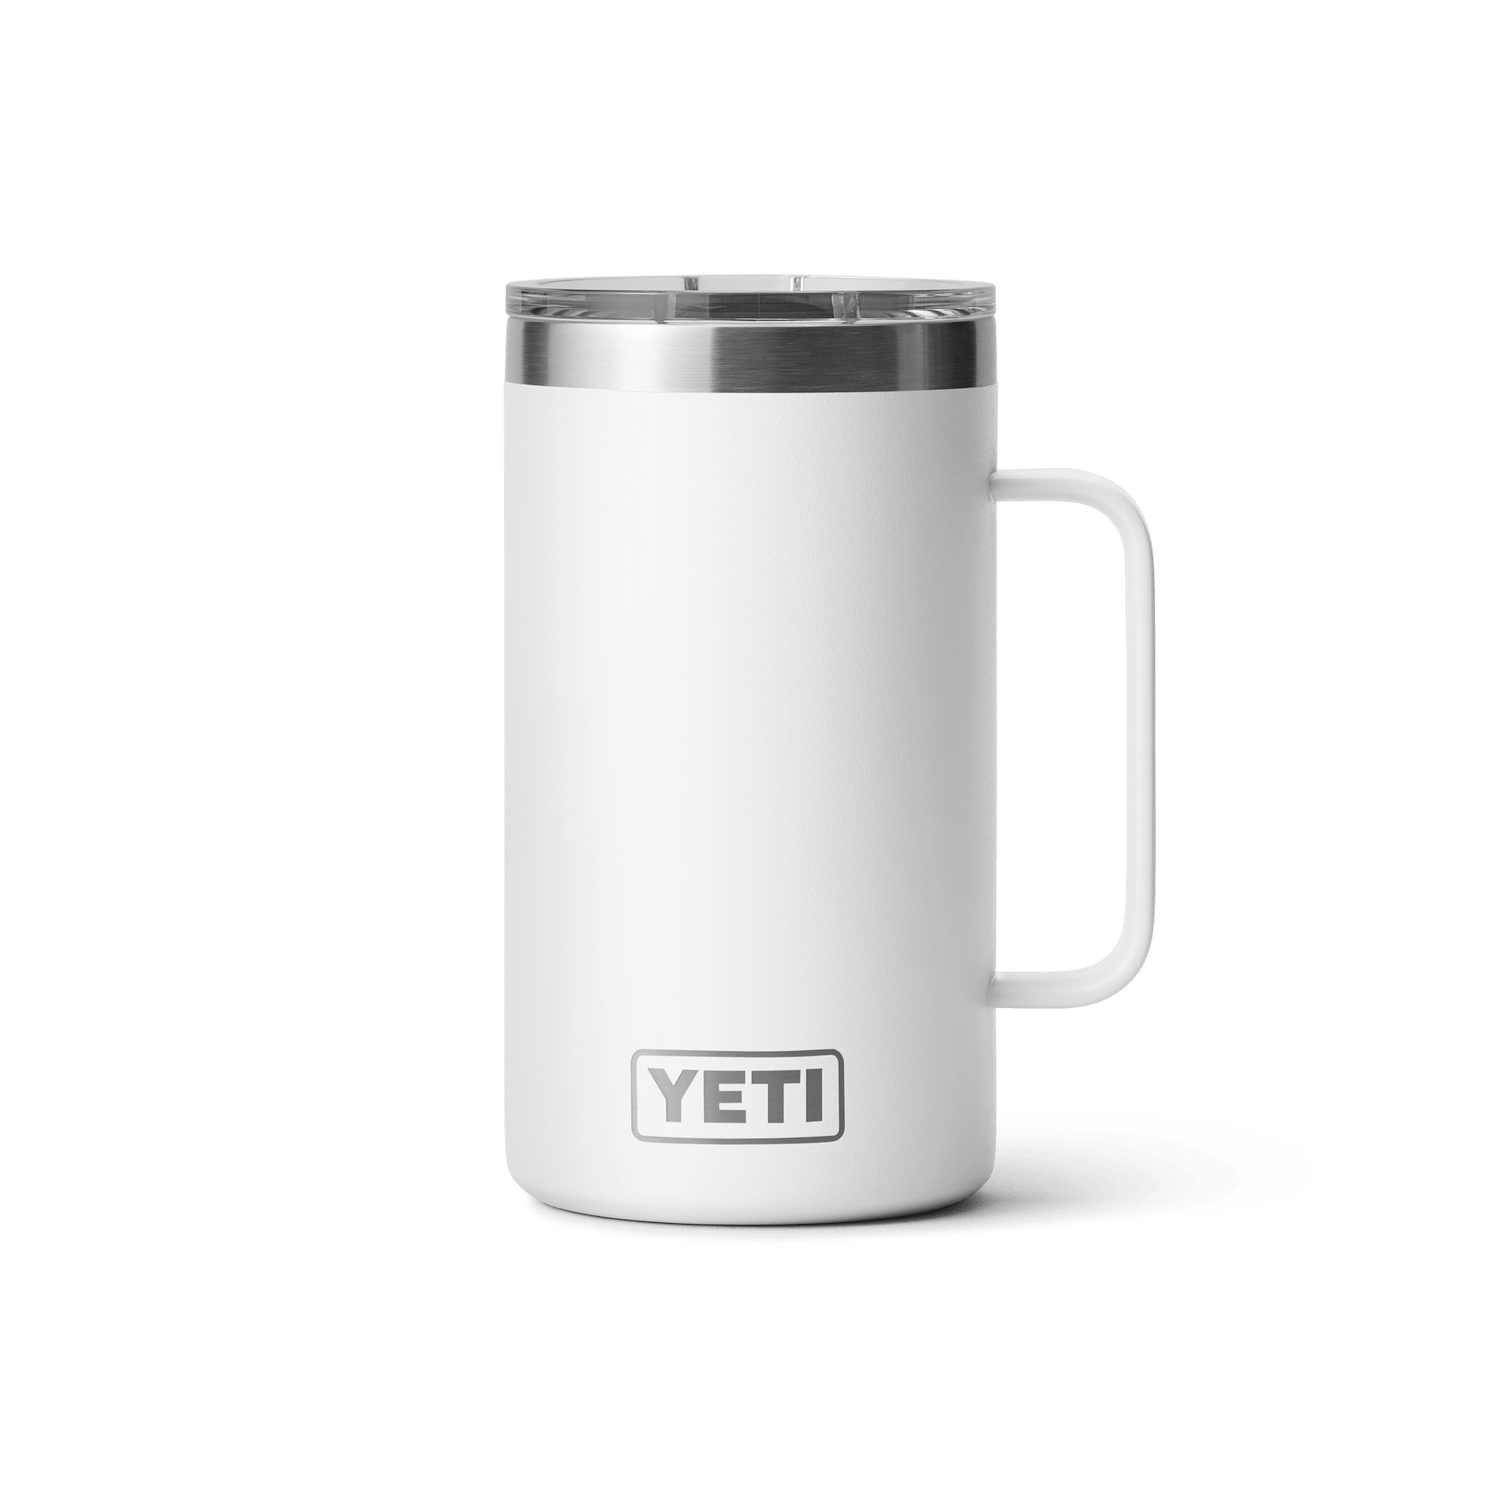 Yeti Rambler 24 oz Mug with Original Lid - Ice Pink